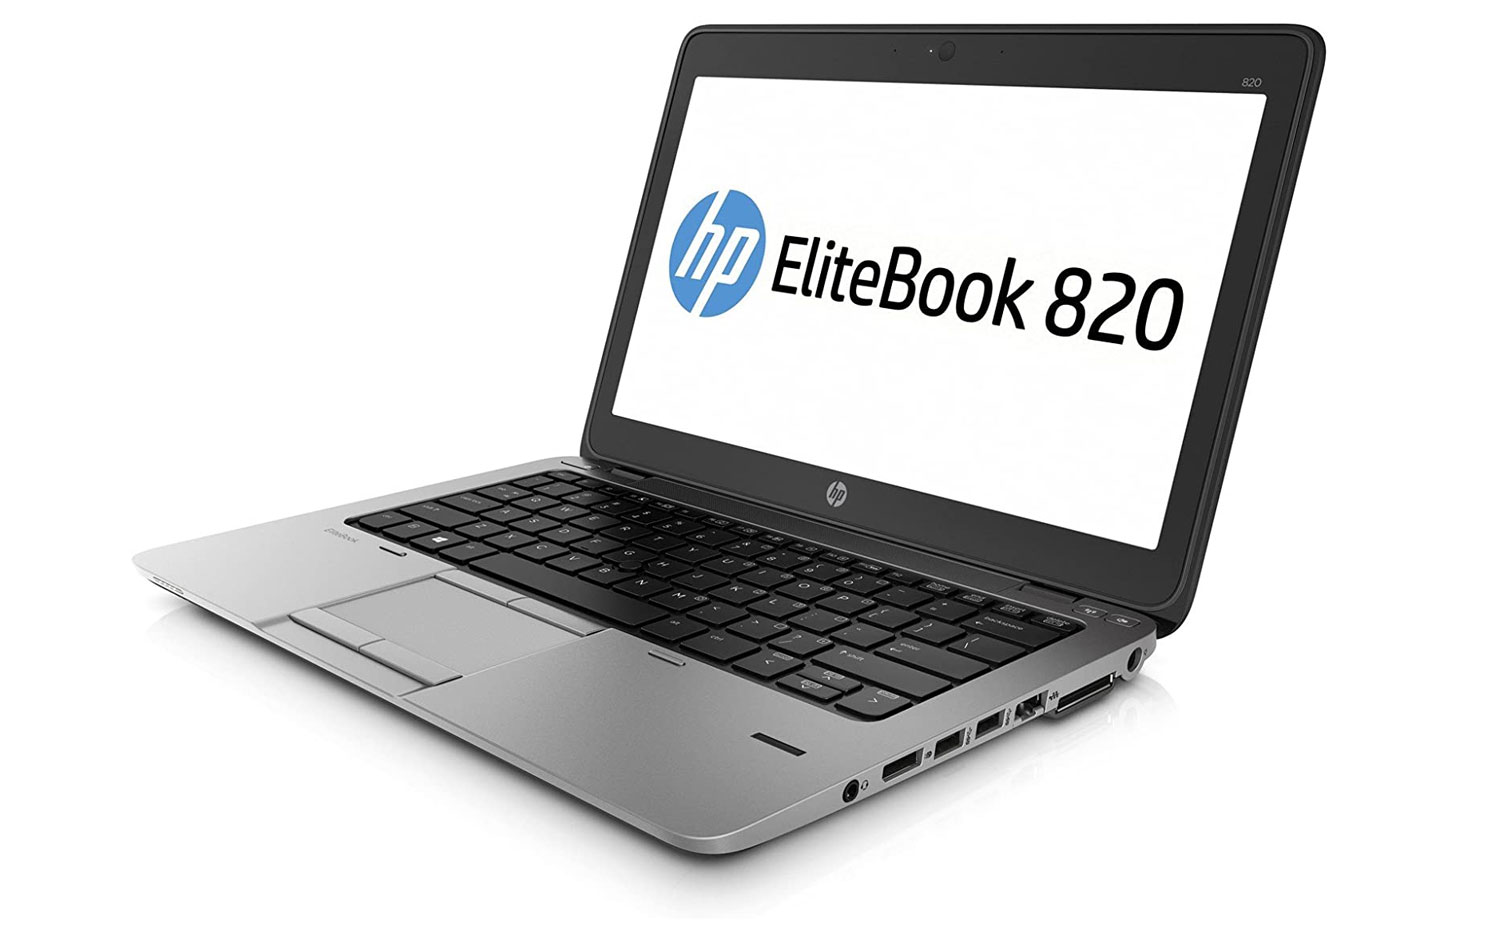 HP EliteBook 820 G2 Intel Core i7 5th Gen 8GB RAM 180GB SSD Microsoft Windows 10 Pro